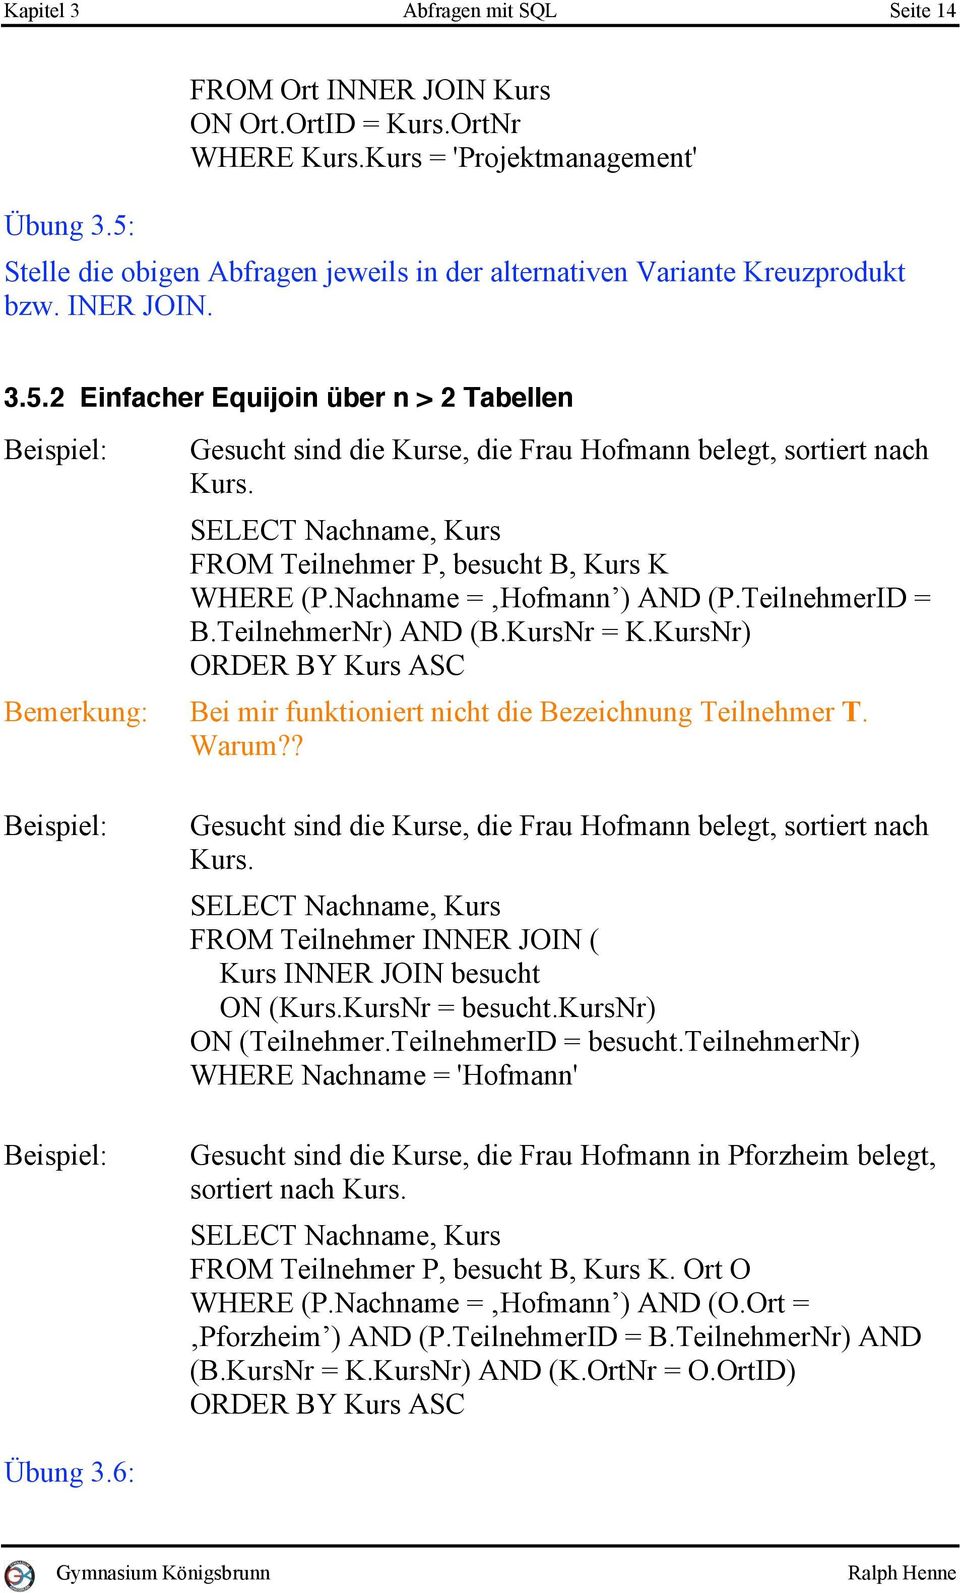 2 Einfacher Equijoin über n > 2 Tabellen Gesucht sind die Kurse, die Frau Hofmann belegt, sortiert nach Kurs. SELECT Nachname, Kurs FROM Teilnehmer P, besucht B, Kurs K WHERE (P.